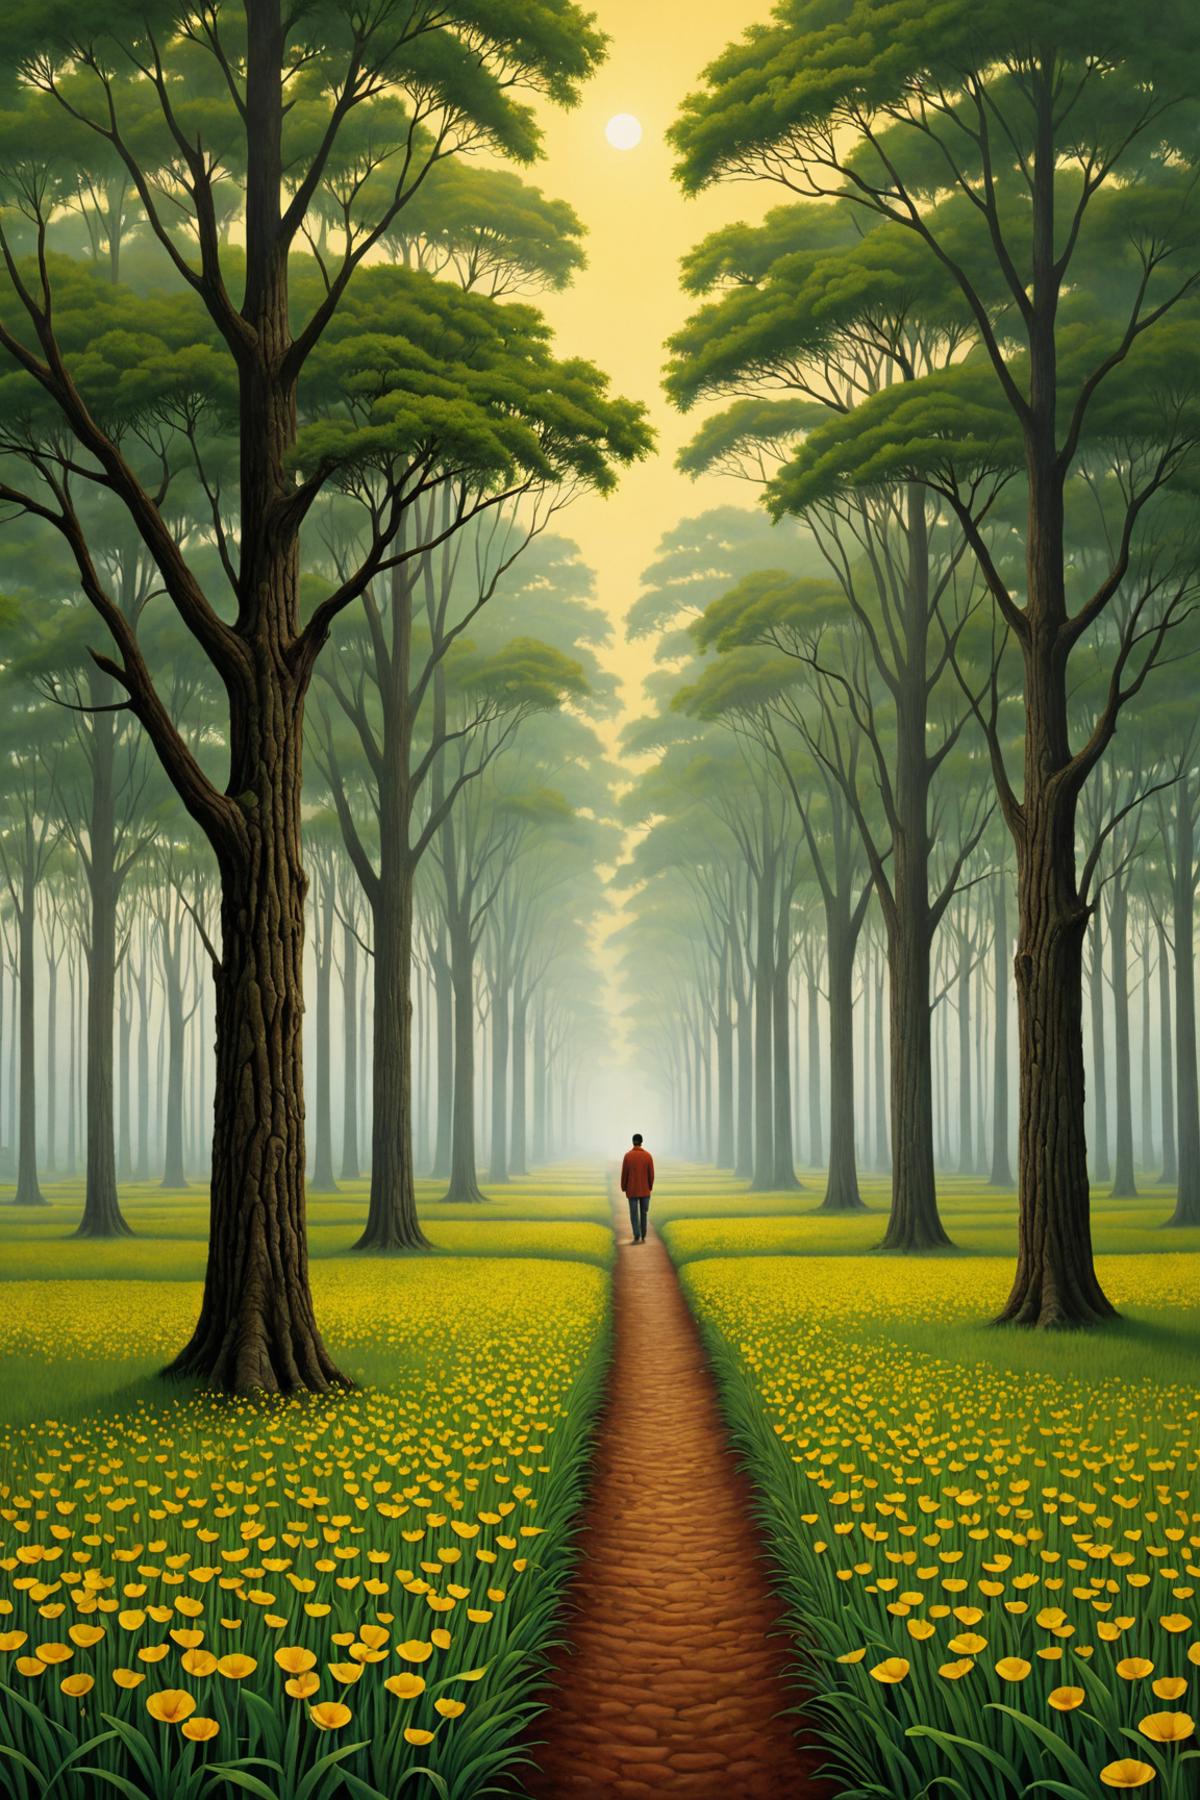 A man walking down a path in a lush green forest.